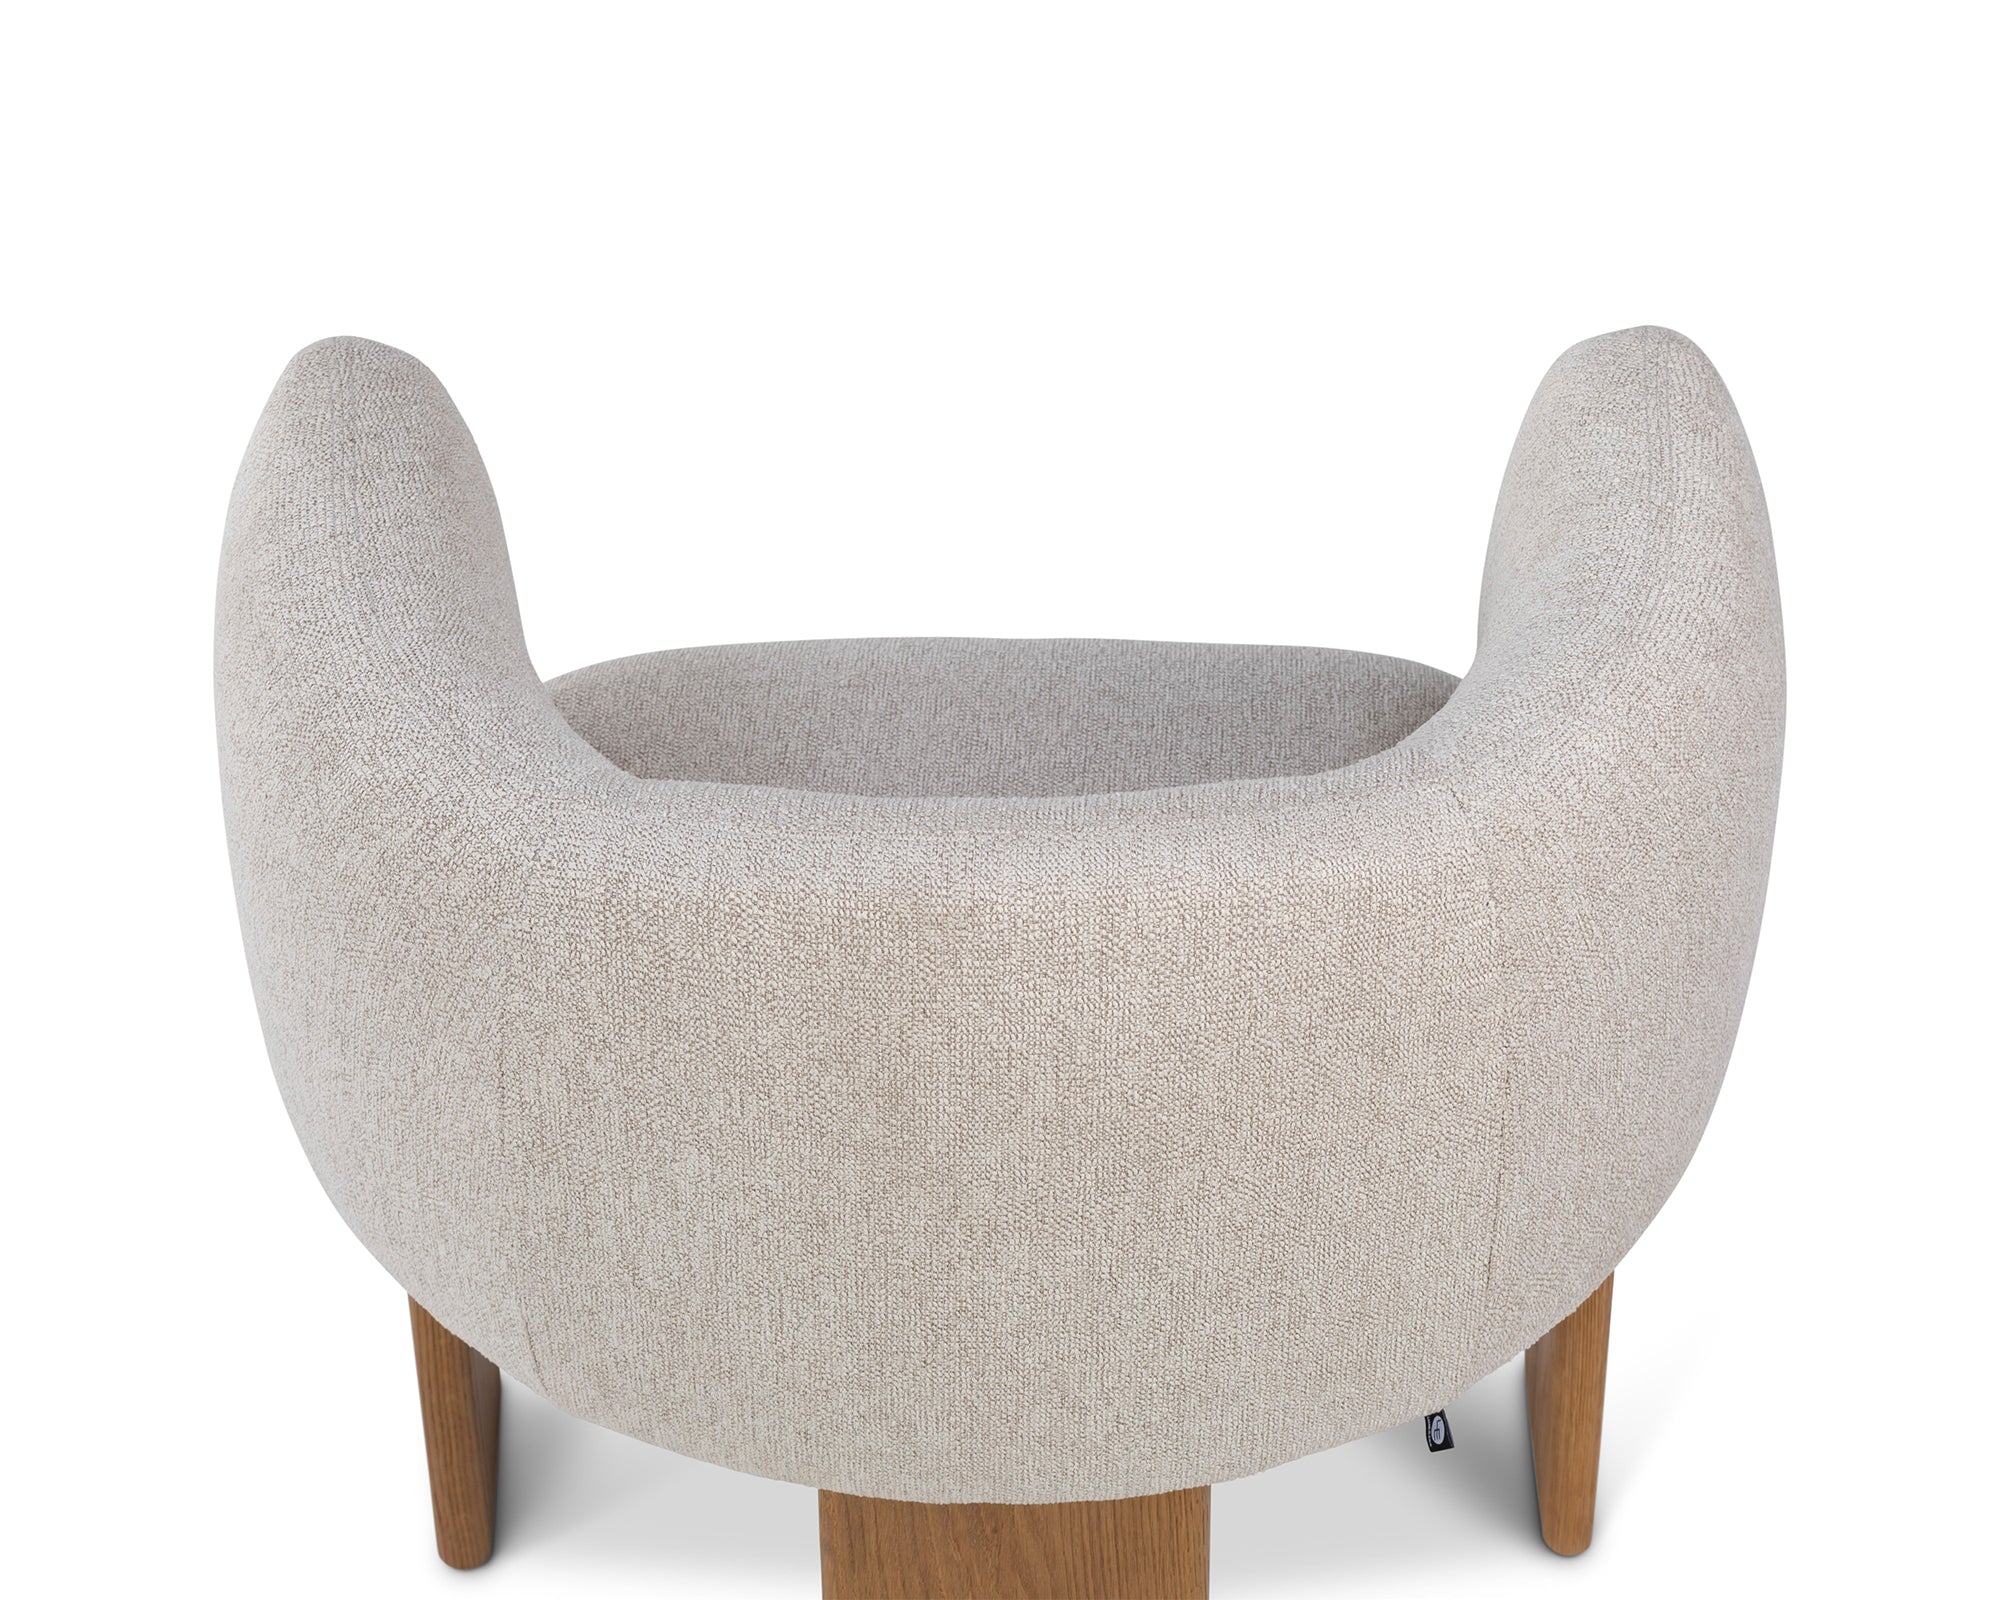 Lucca dining chair – bilma sand &amp; dry honey oak